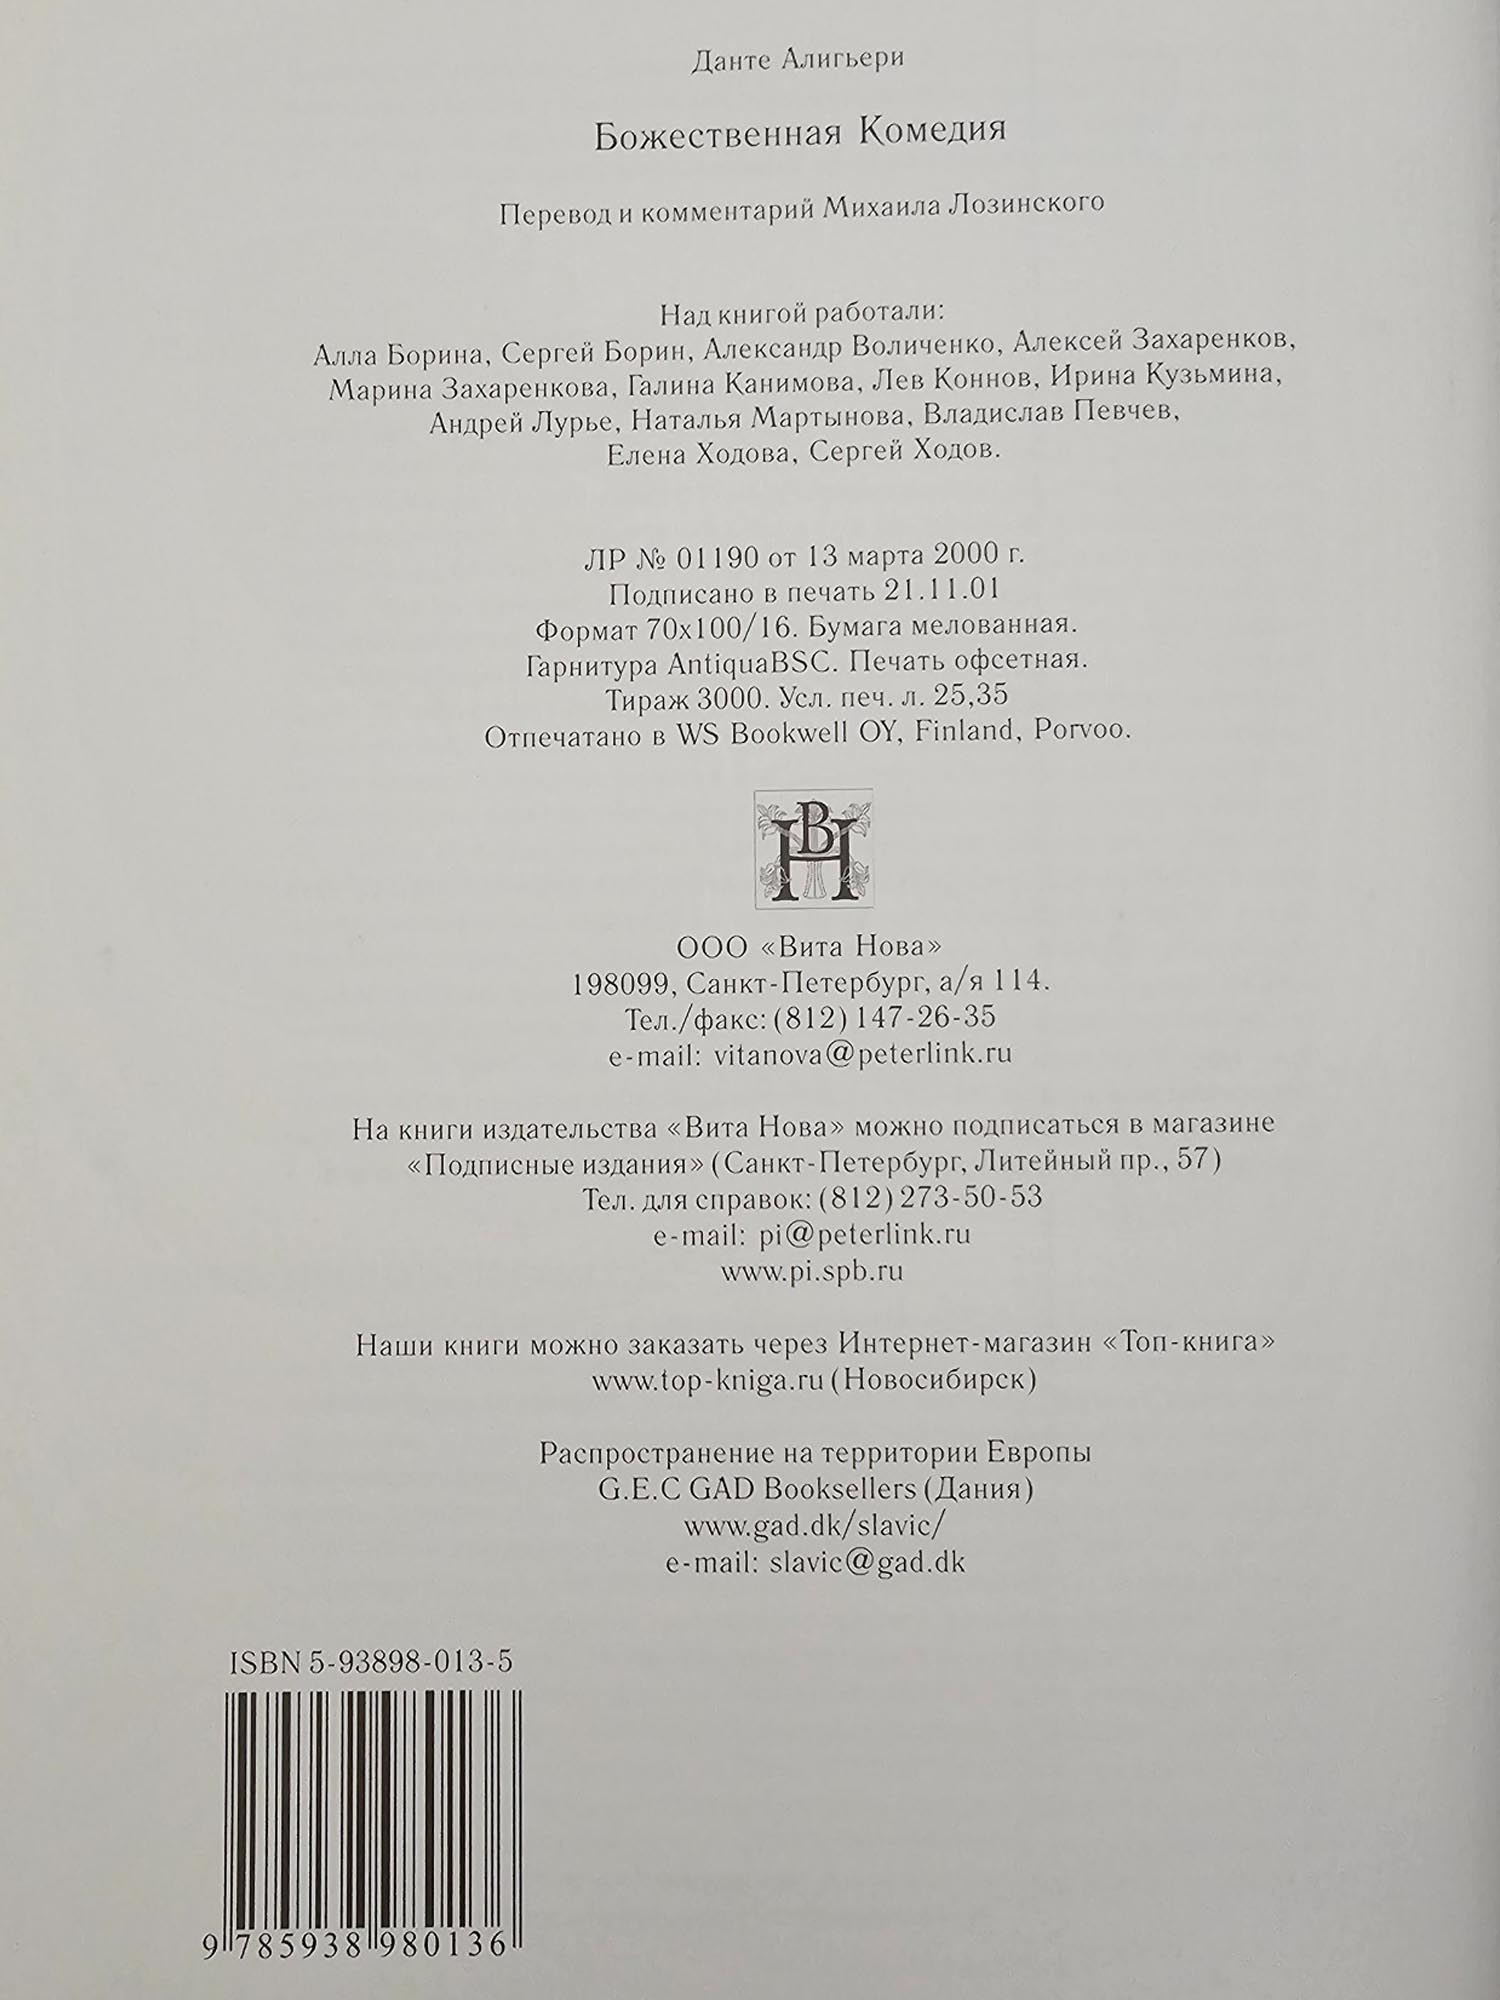 2006 THE DIVINE COMEDY BOOK BY DANTE IN RUSSIAN PIC-10